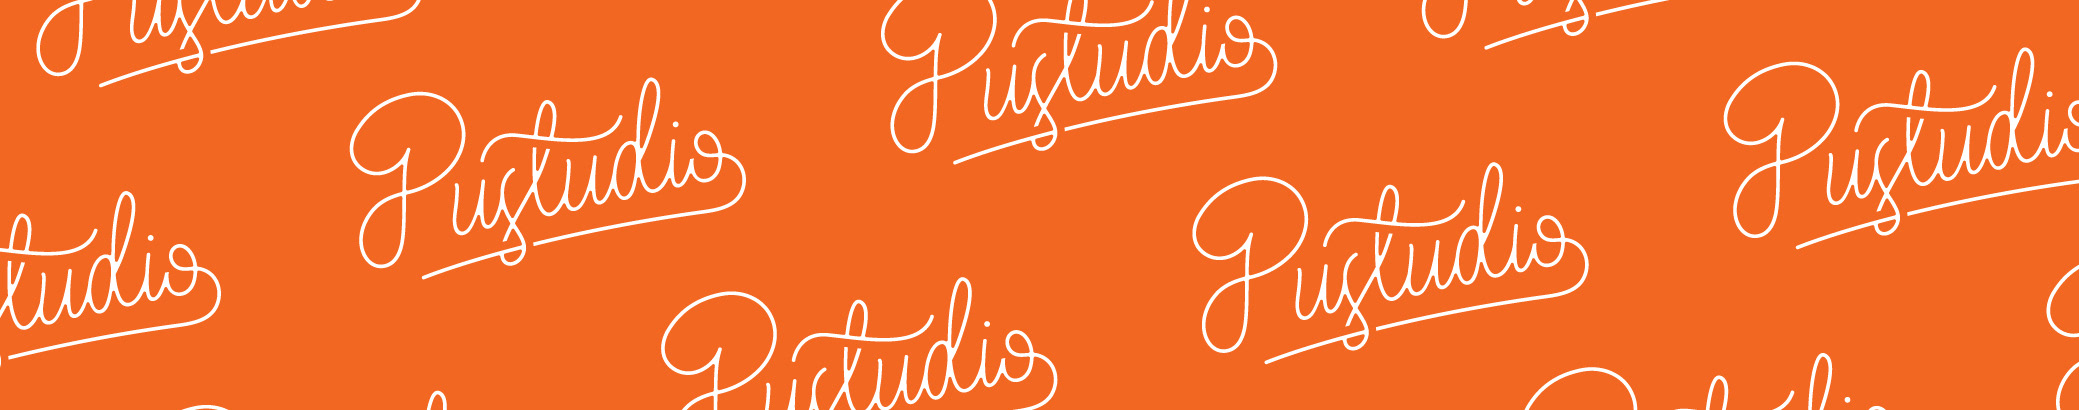 PUSTUDIO Creative's profile banner